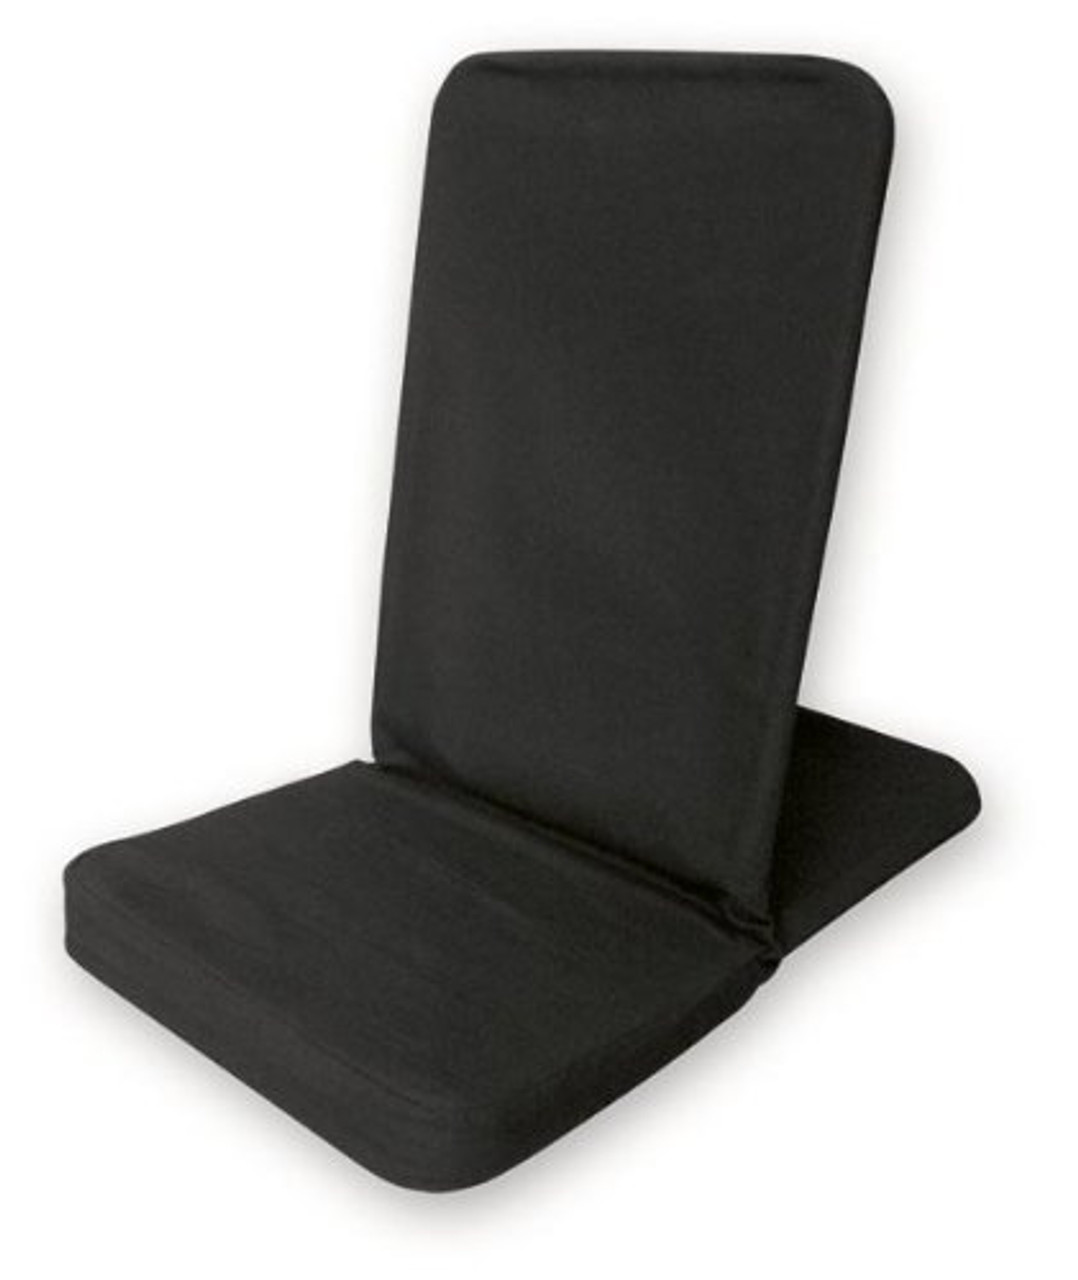 Backjack Chair For Meditation And Floor Sitting